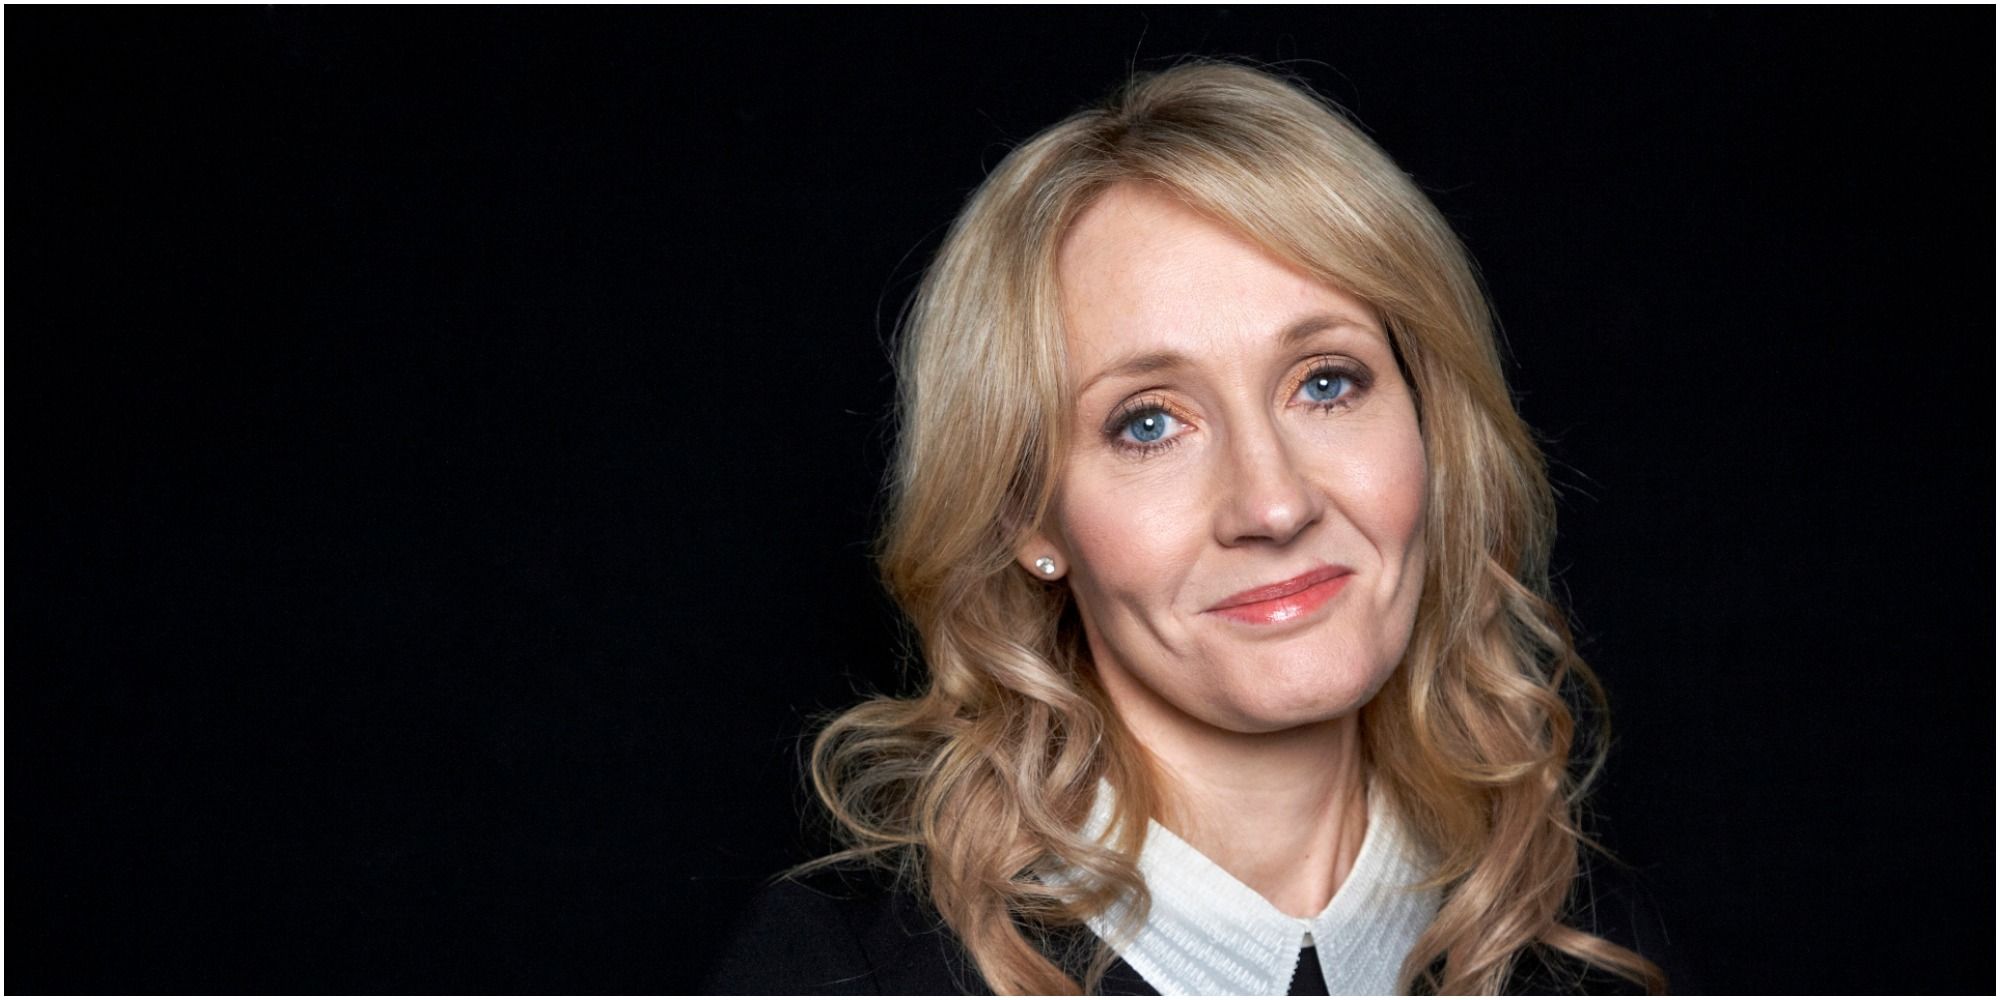 Headshot of J.K. Rowling, author of the Harry Potter franchise